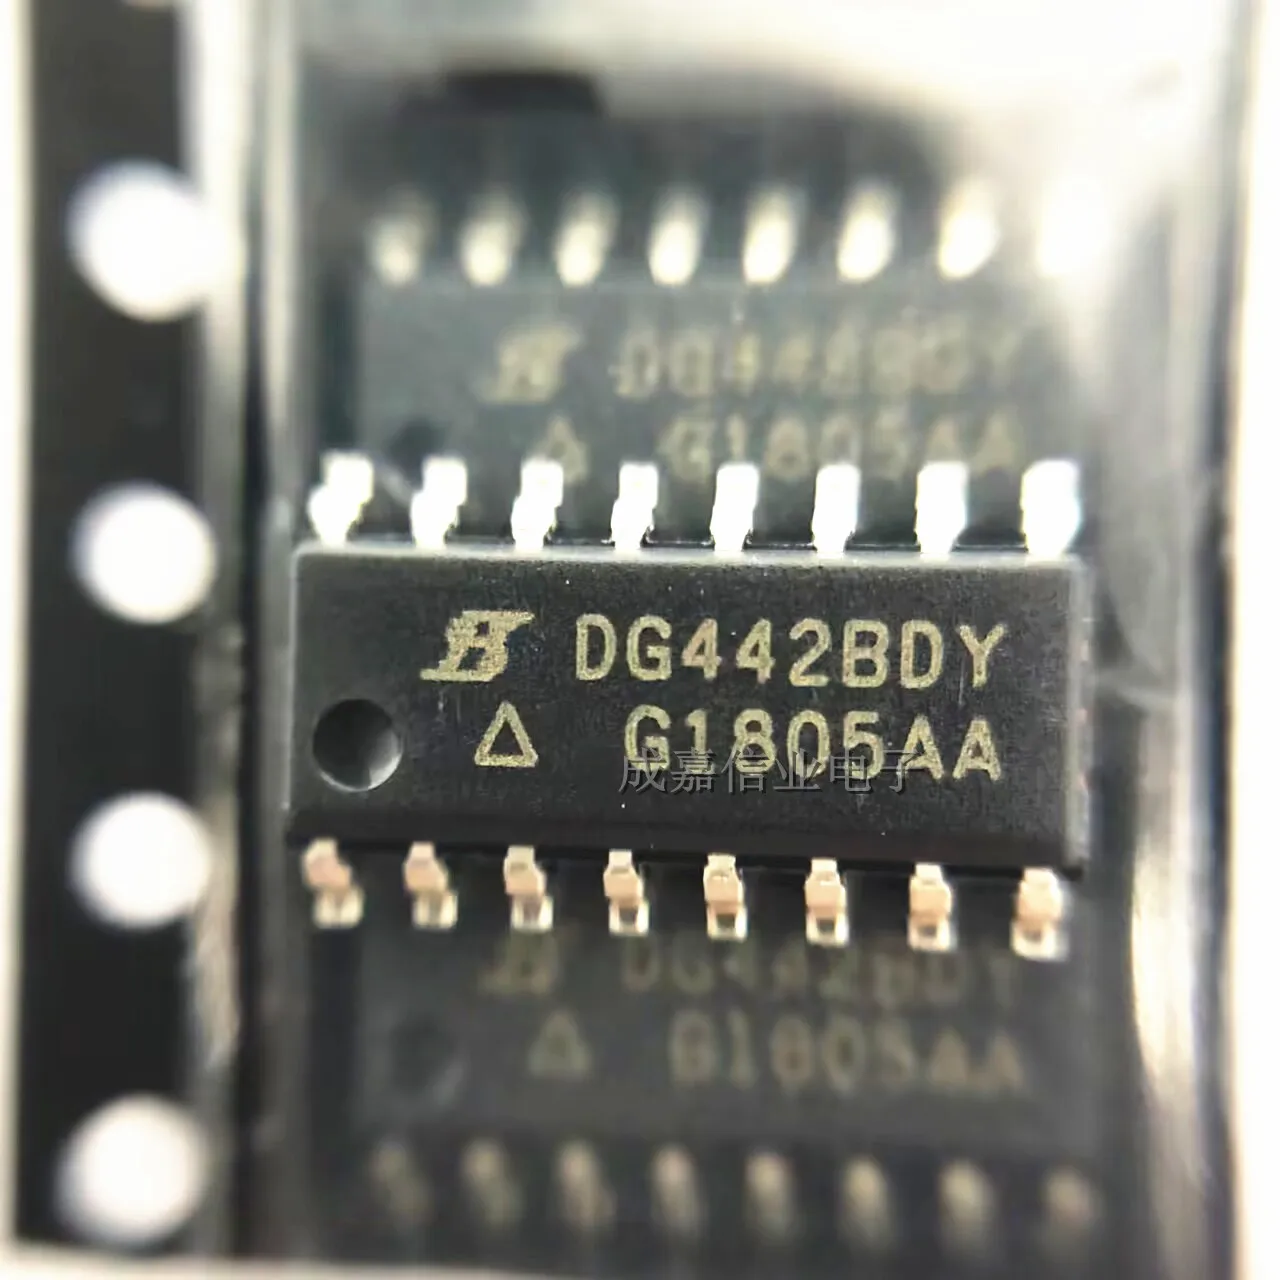 

10pcs/Lot DG442BDY-T1-E3 SOP-16 DG442BDY Analog Switch ICs QUAD SPST ANALOG SWITC Operating Temperature:- 40 C-+ 85 C